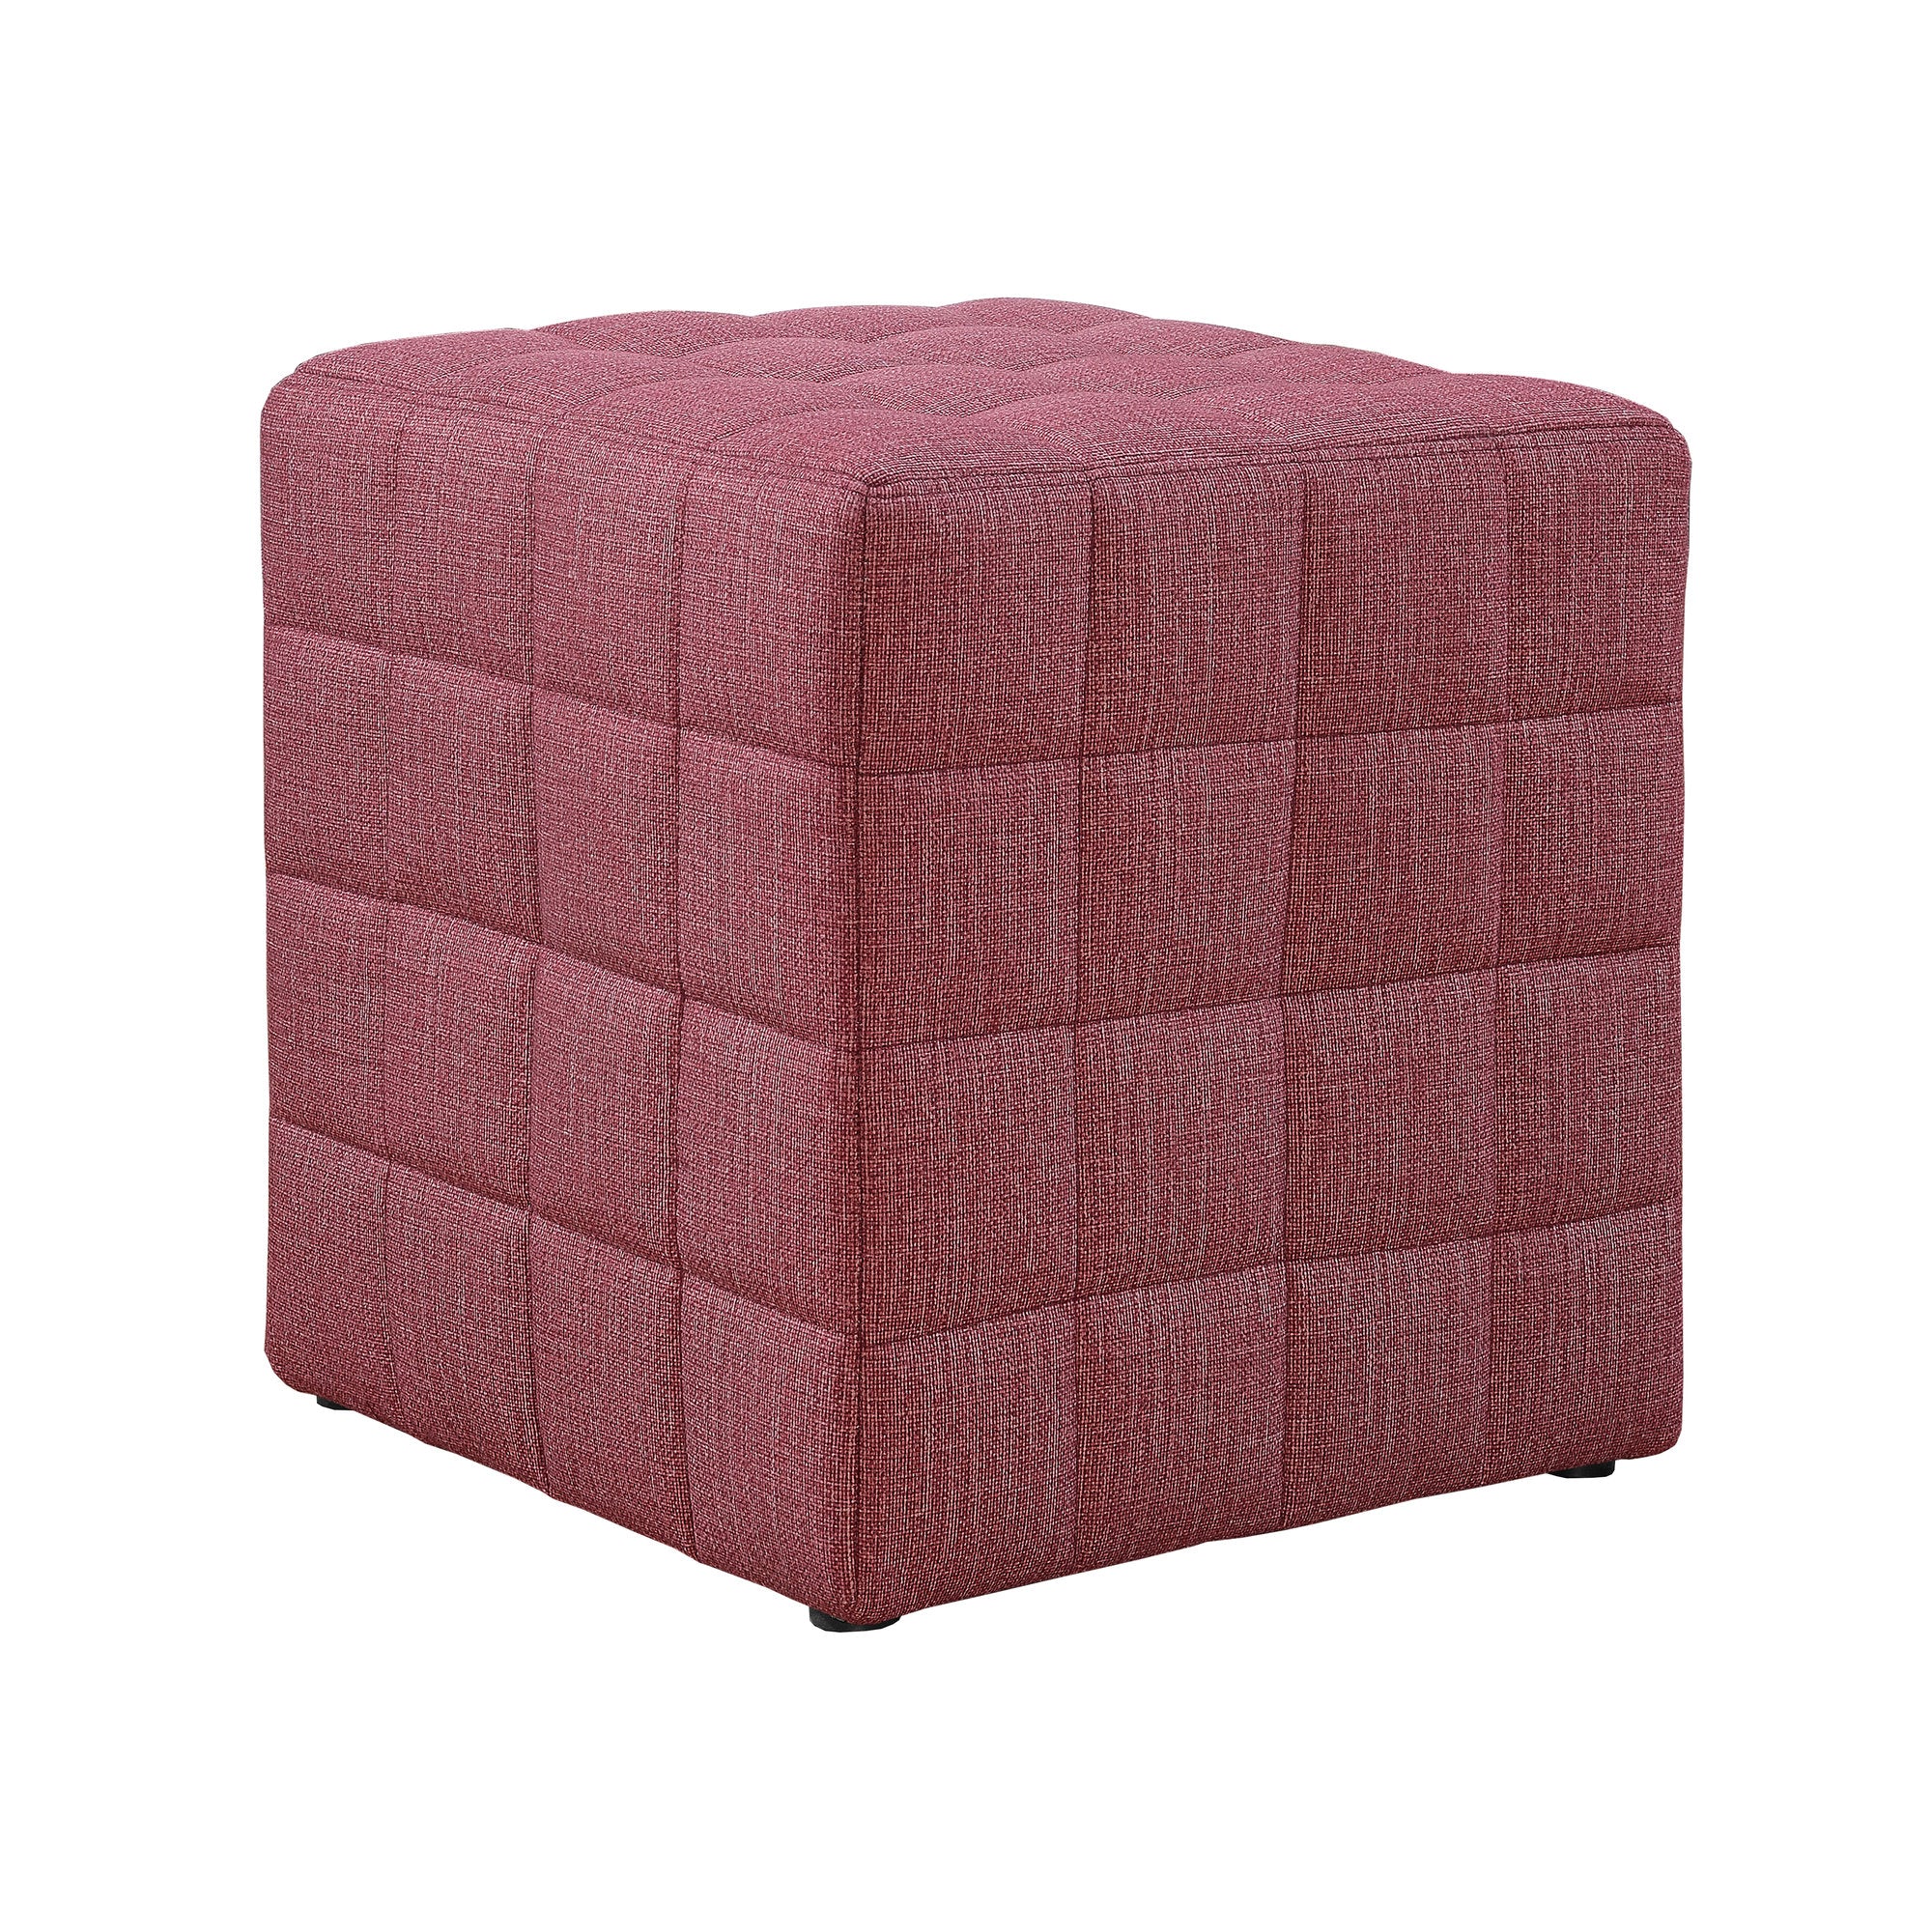 Monarch Spec Ottoman Vergie Ottoman - Light Red Linen-Look Fabric Heras Home Furniture